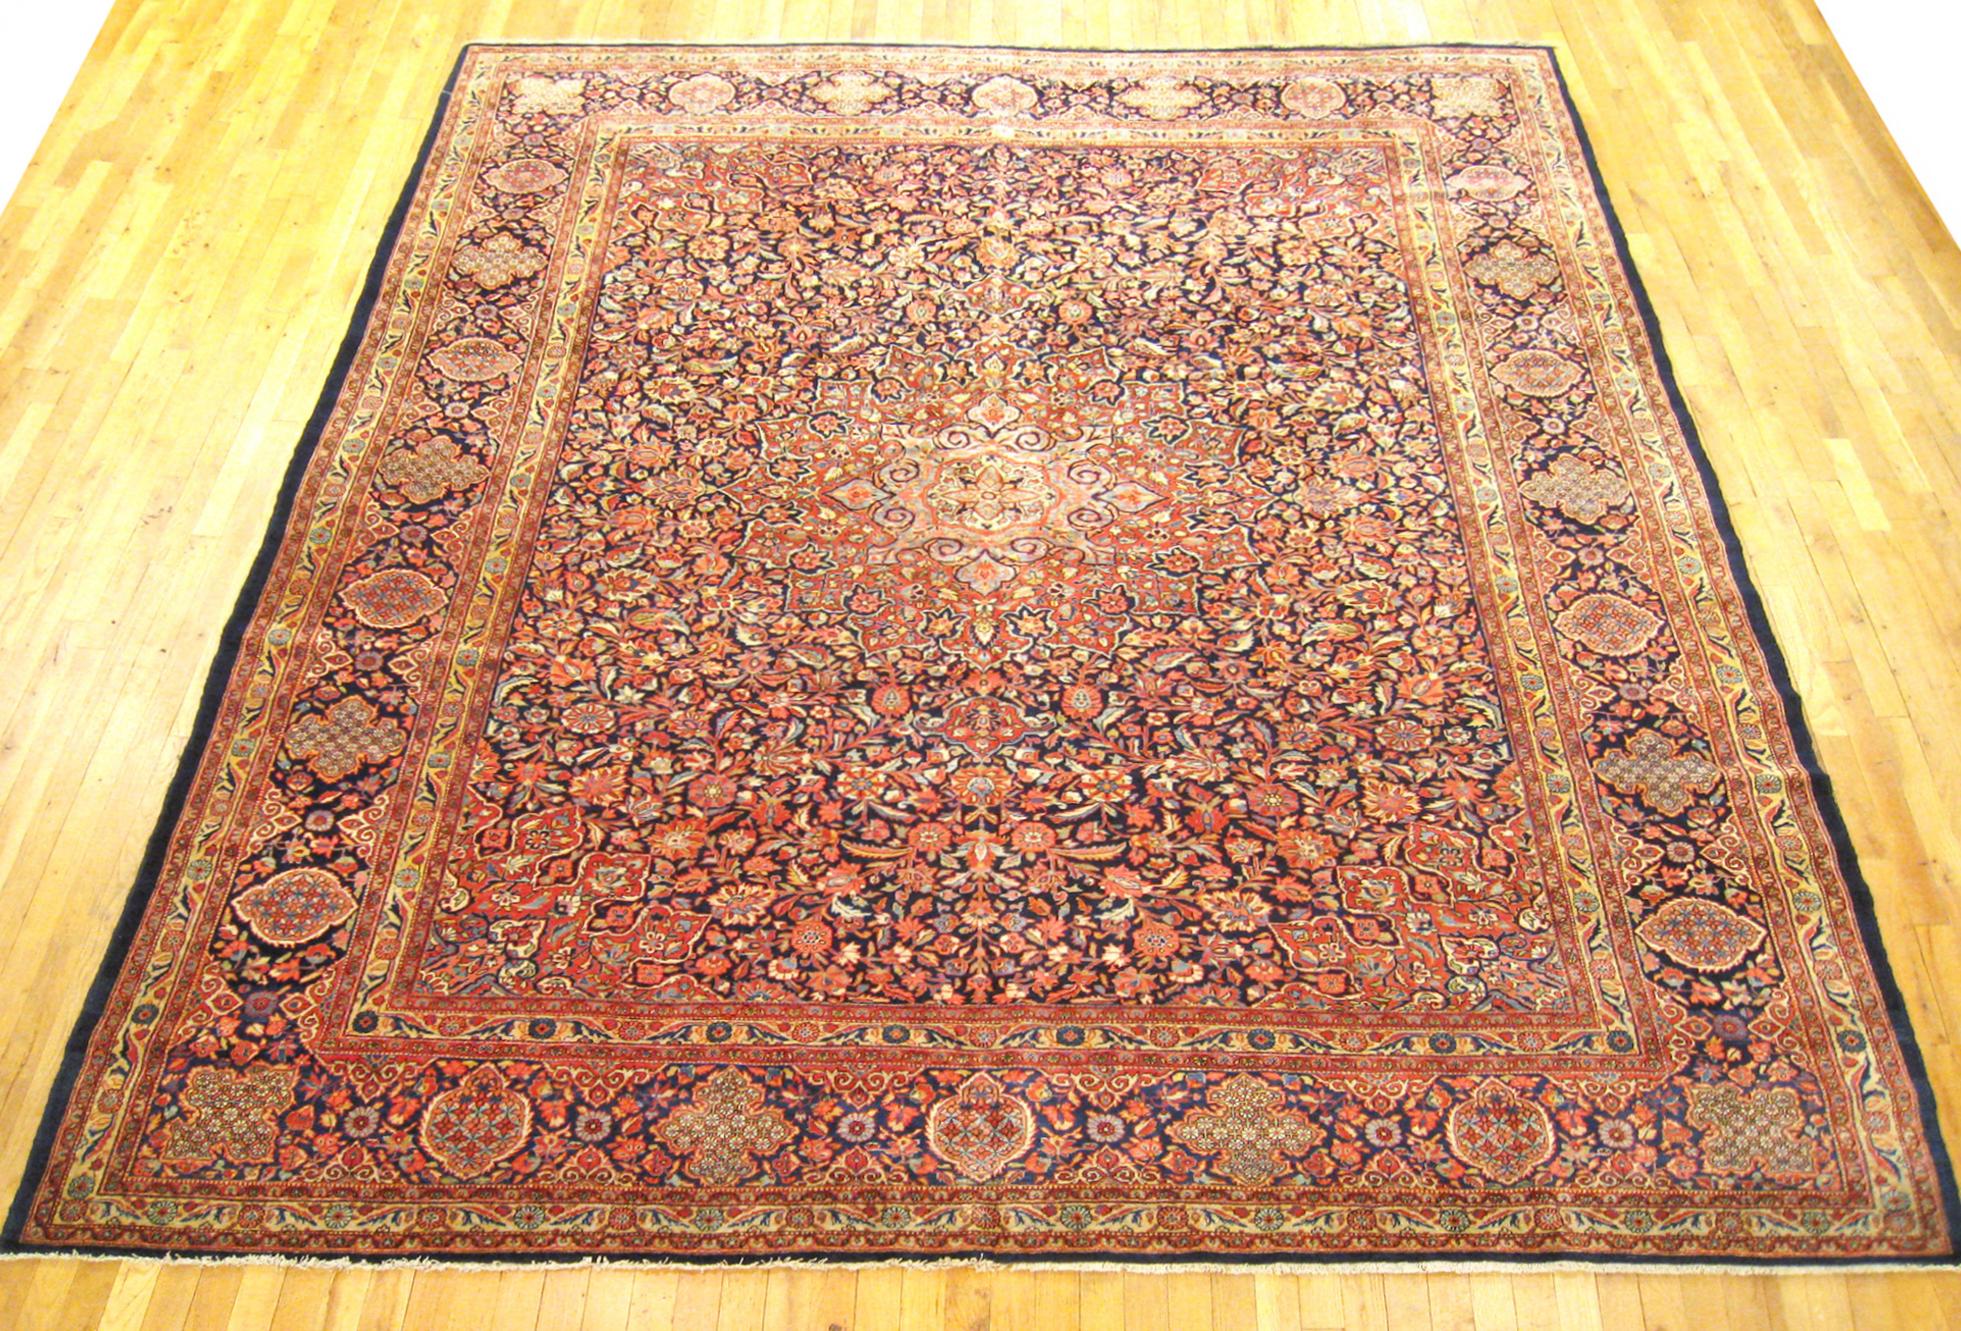 Antique Persian Kashan Dabir oriental carpet, in room size.

An extraordinary antique Persian Kashan Dabir carpet, circa 1910, size 11'7